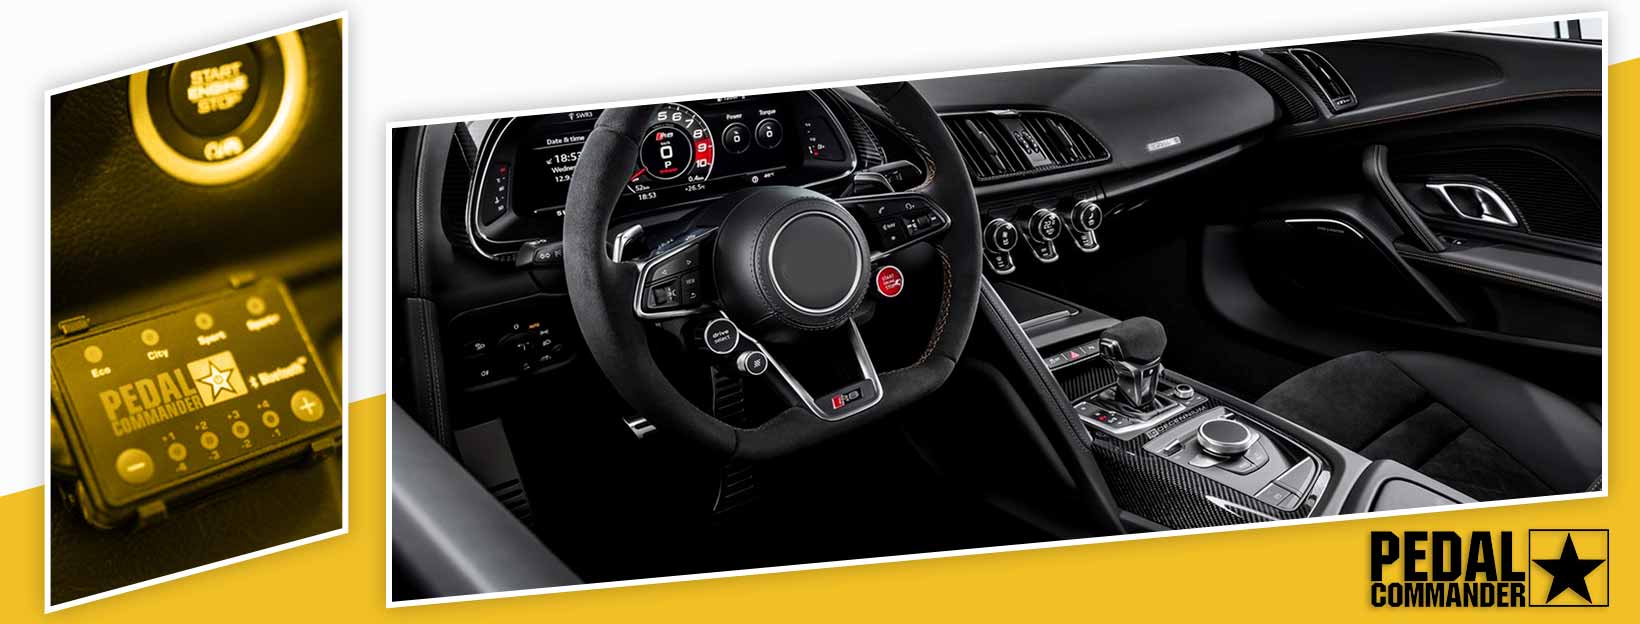 Pedal Commander for Audi R8 - interior